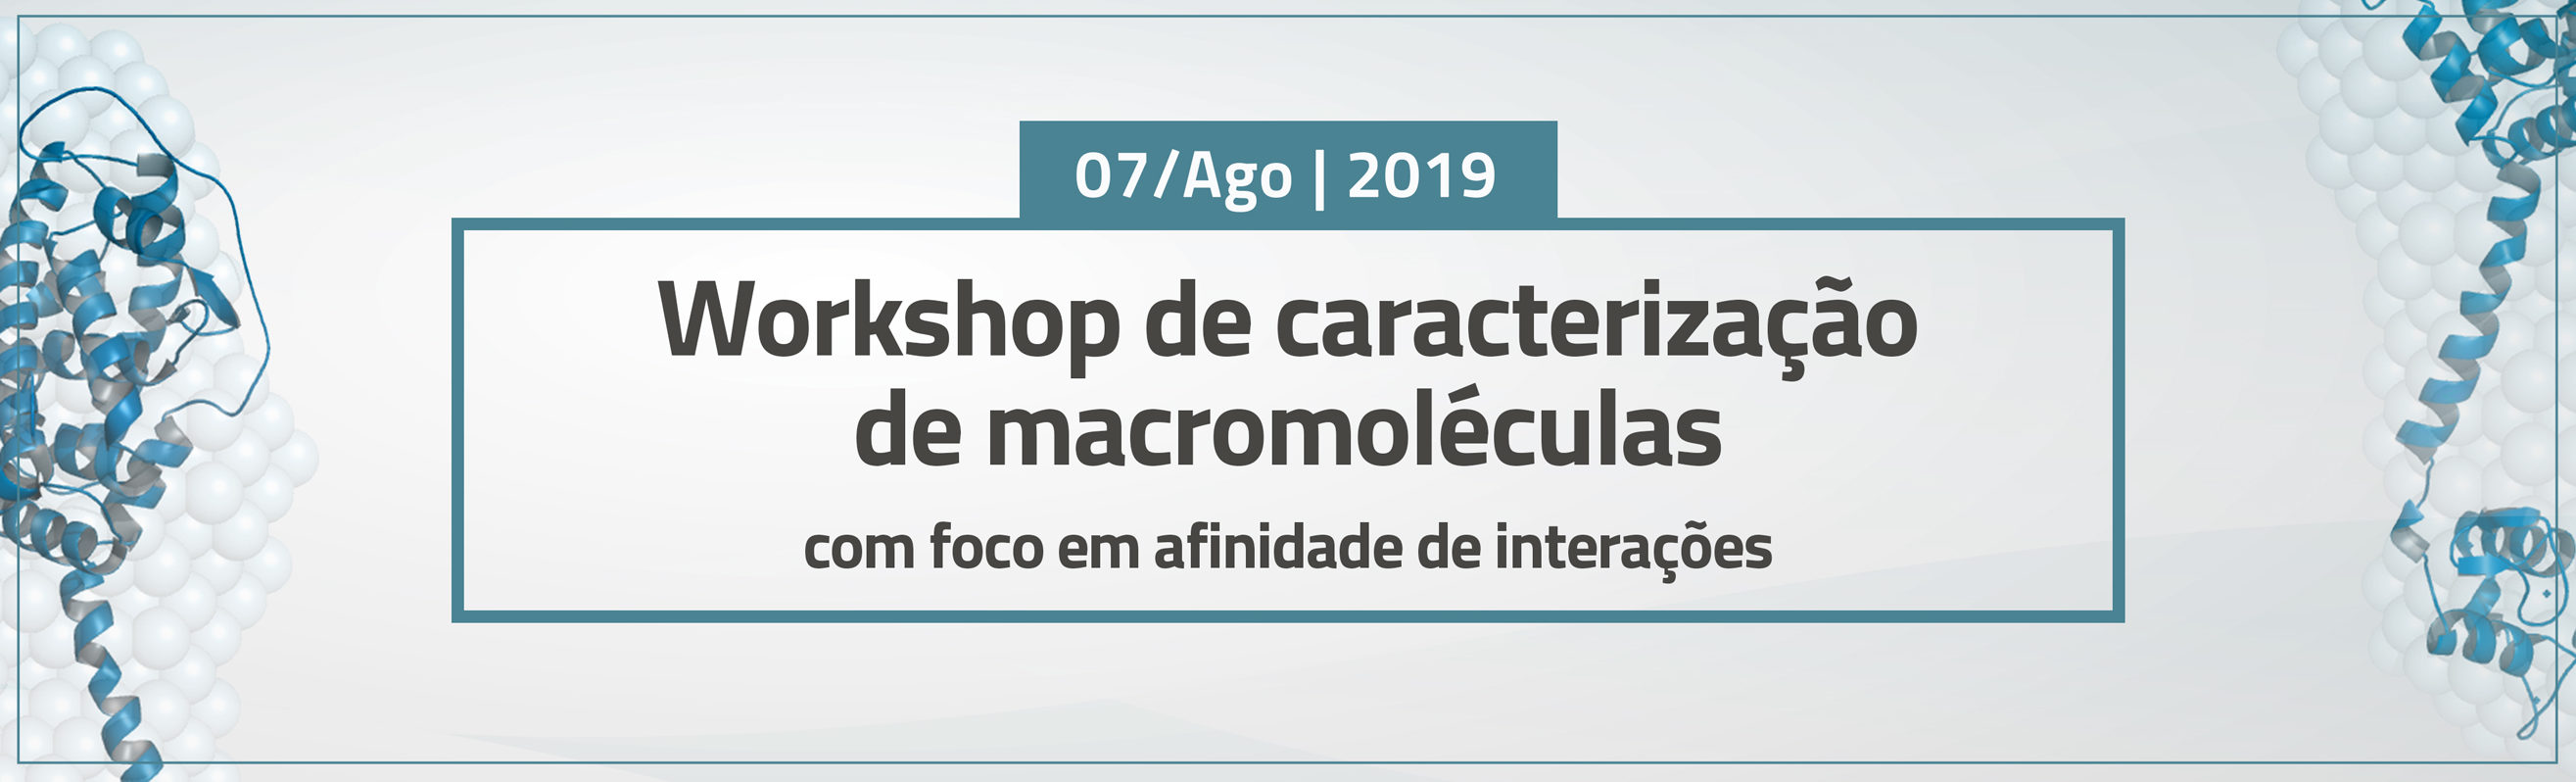 Workshop de caracterização de macromoléculas